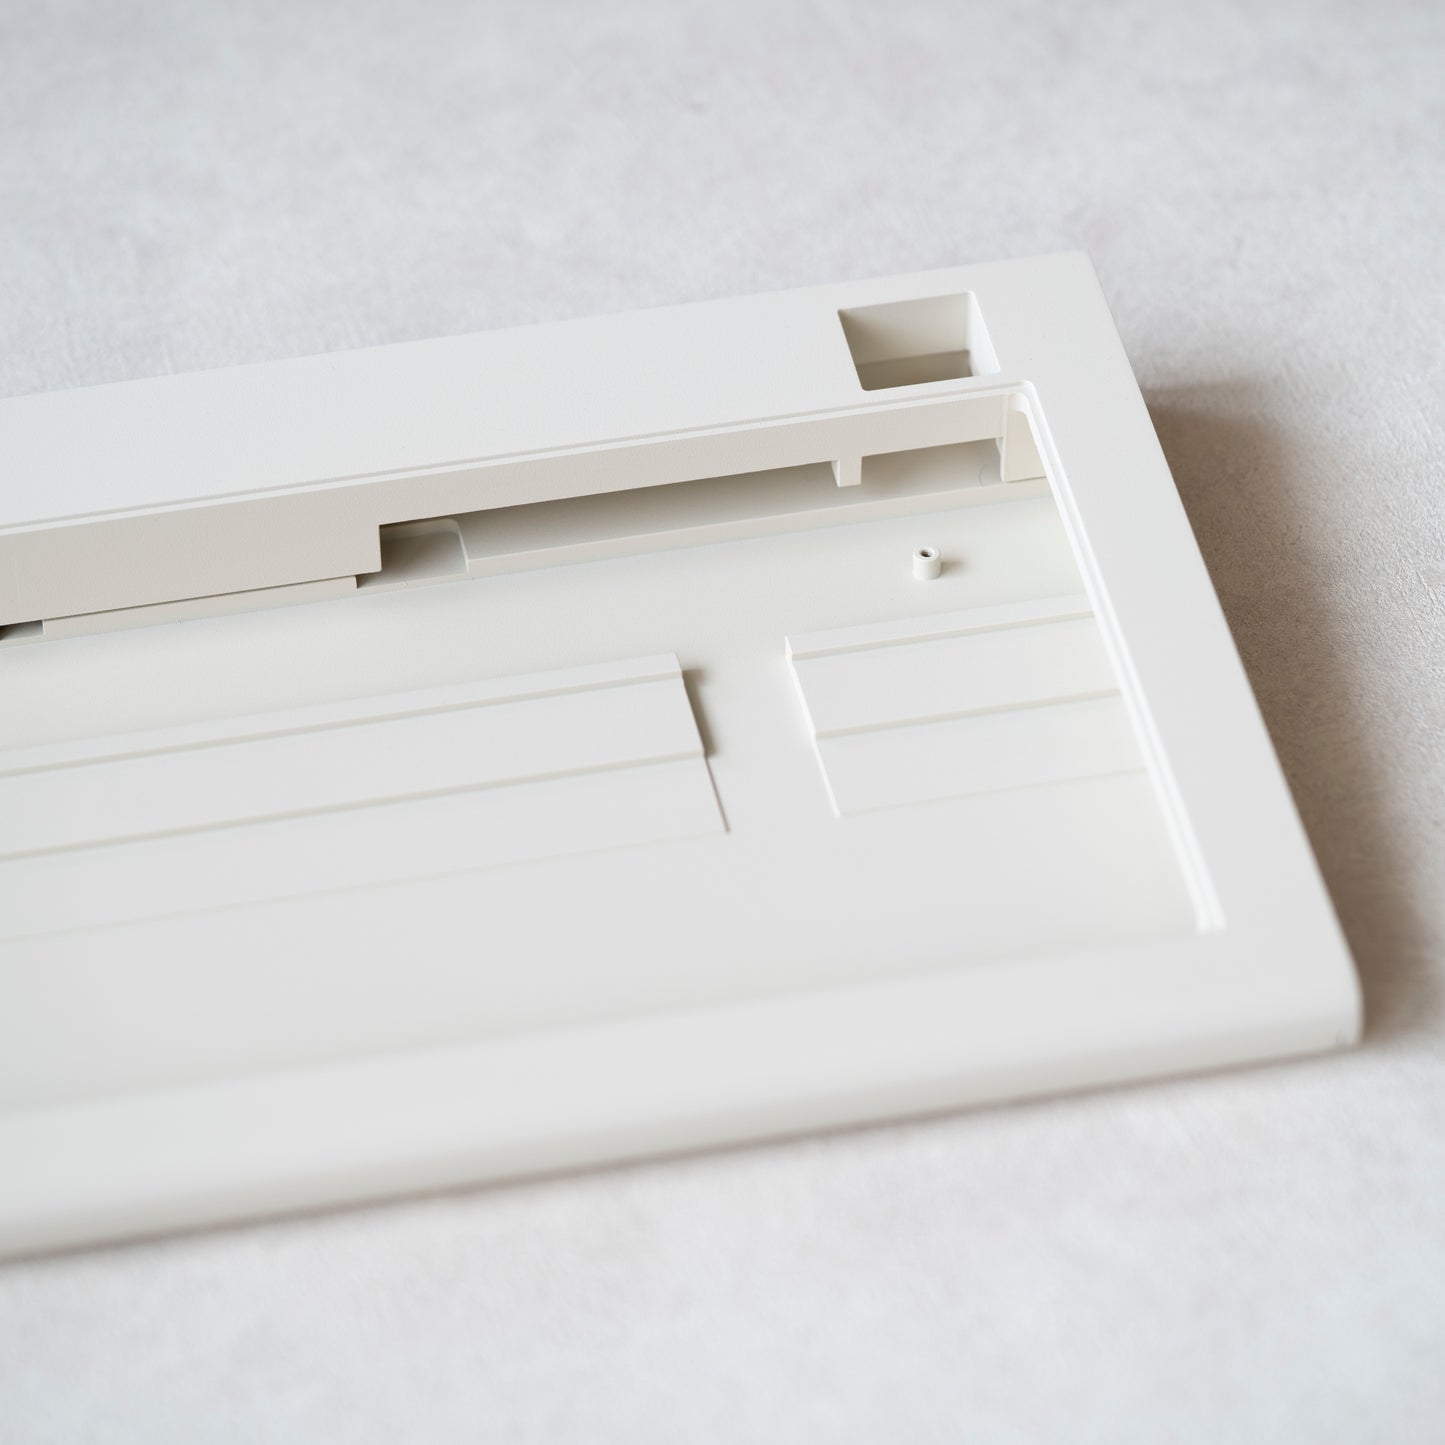 
                  
                    (Group Buy) Model OLED Keyboard Kit
                  
                